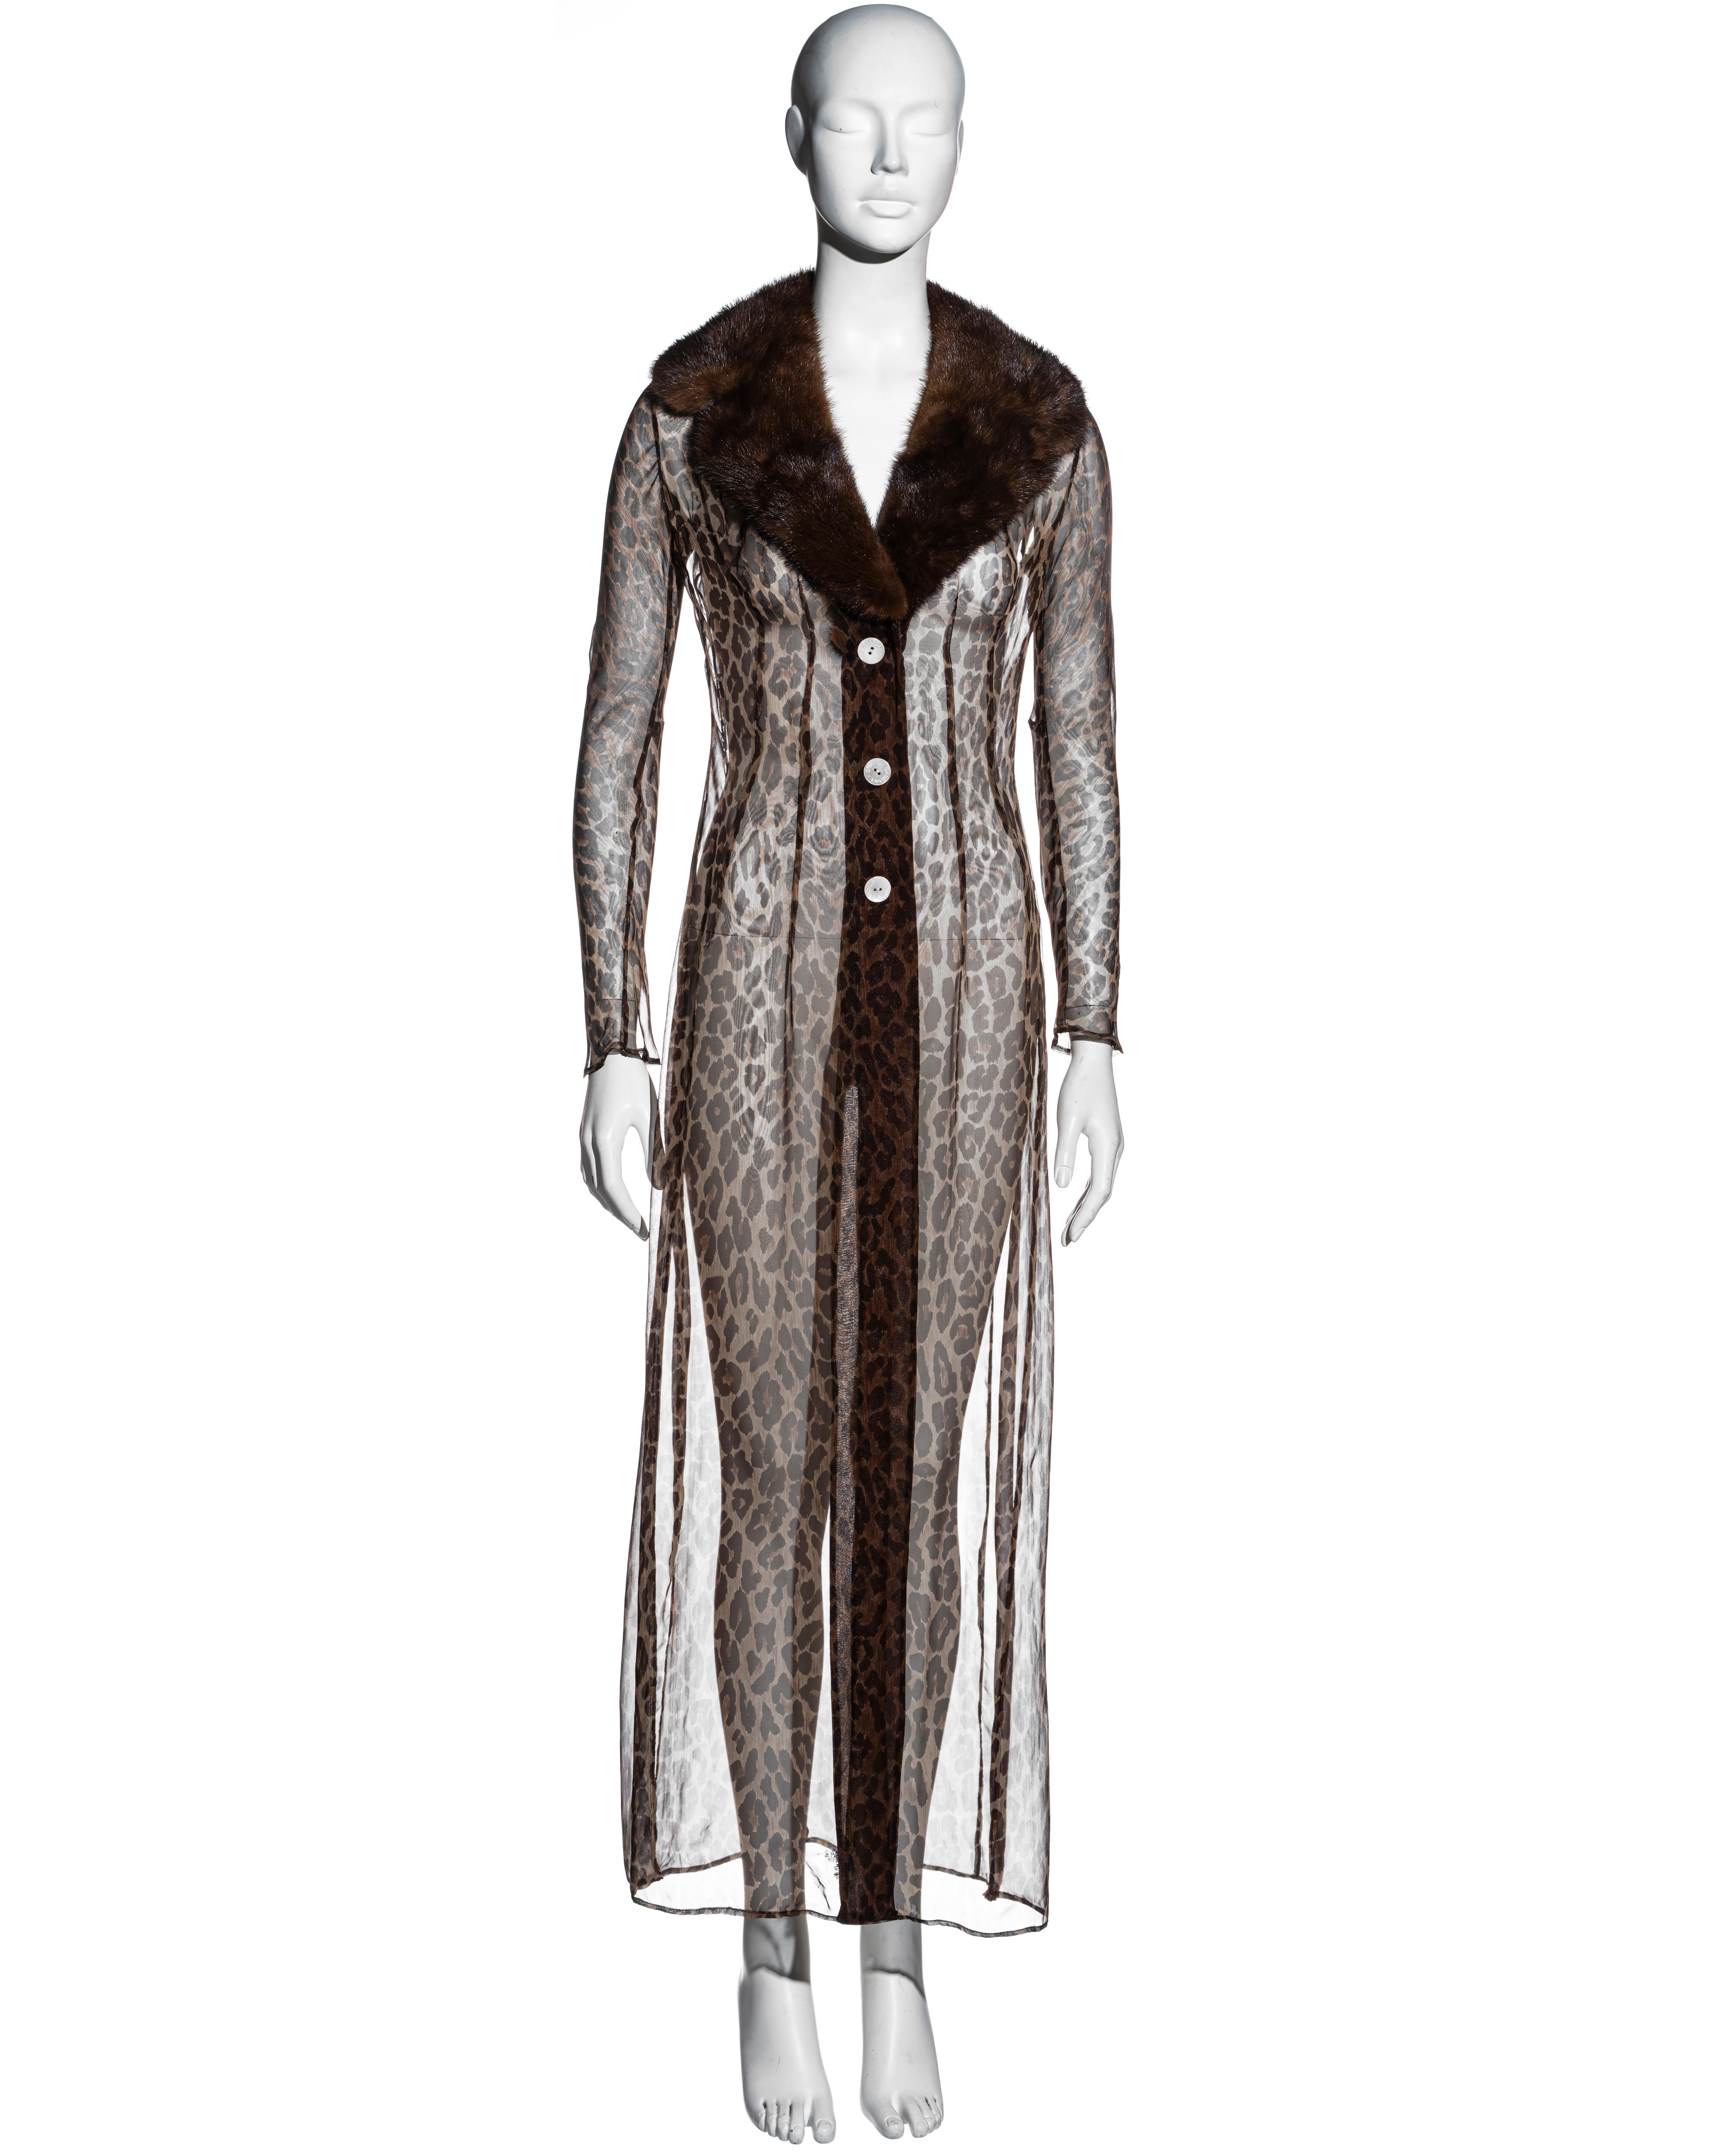 Gray Dolce & Gabbana leopard print silk chiffon dress coat with fur collar, ss 1997